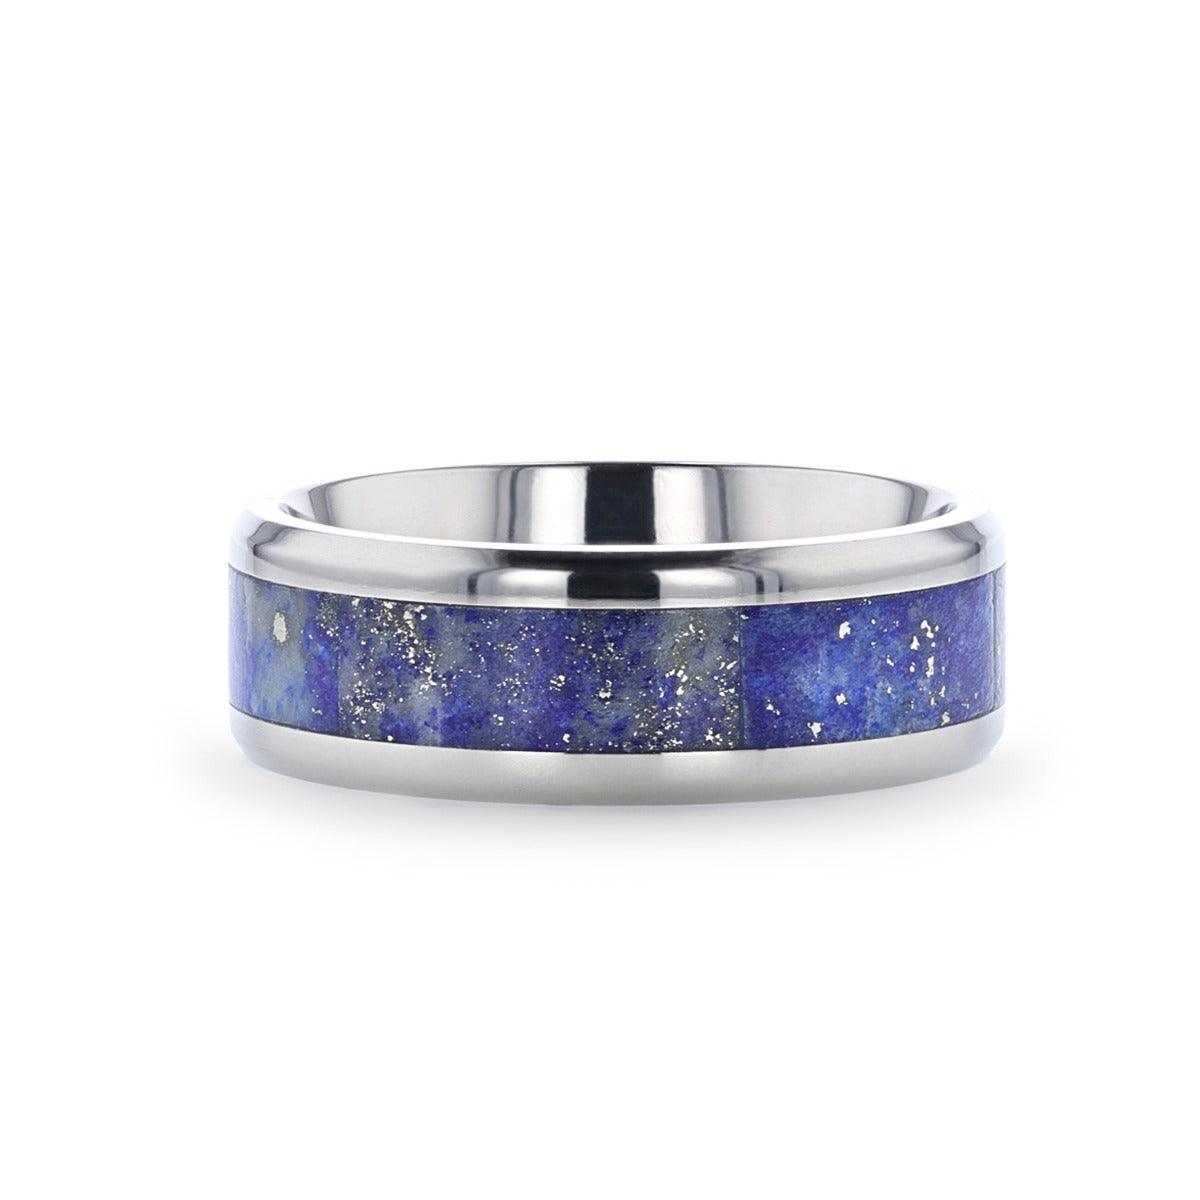 MALONE - Men's Titanium Wedding Ring with Blue Lapis Inlay & Beveled Edges - 8 mm - The Rutile Ltd